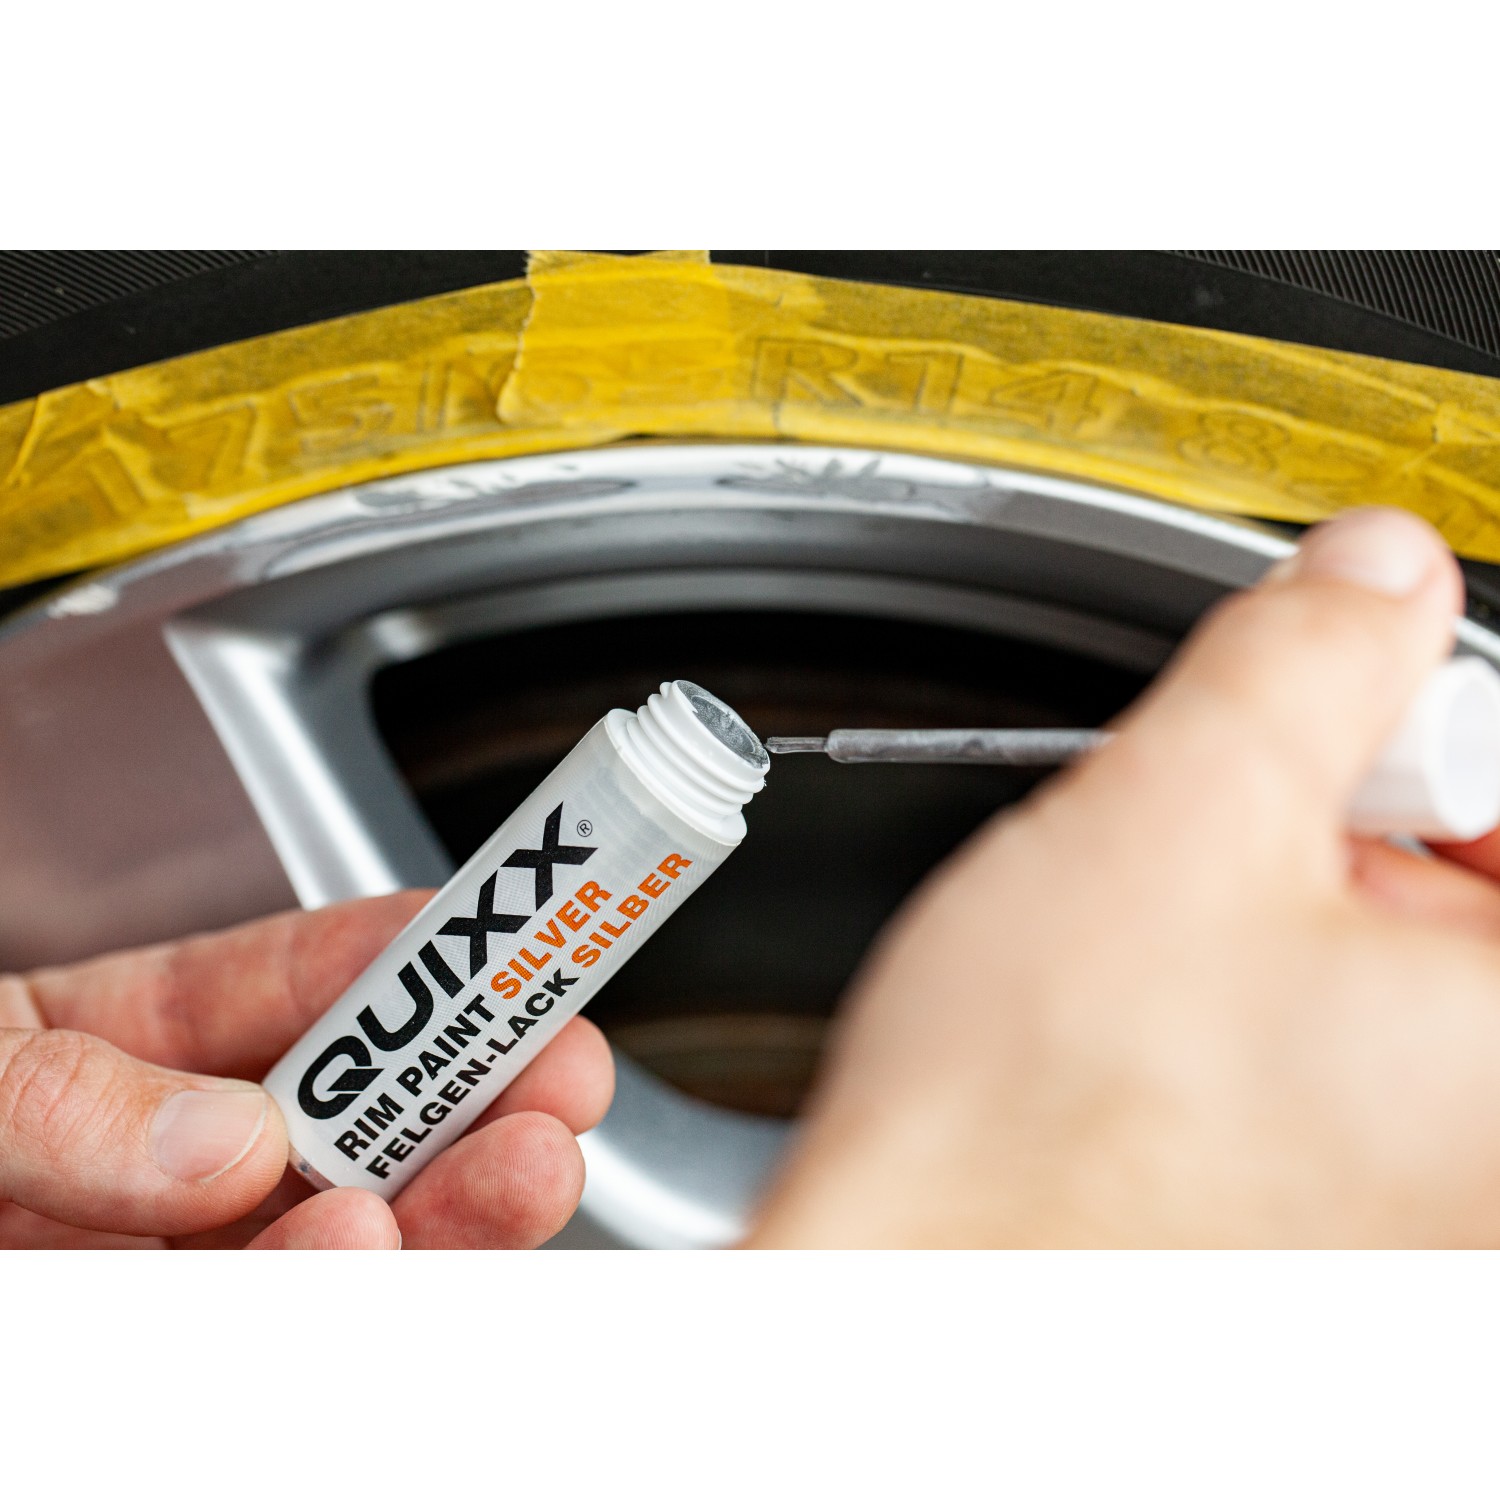 Hot Car Diy Alloy Wheel Repair Adhesive Kit General Purpose Silver Paint  Fix Tool For Car Auto Rim Dent Scratch Care Accessories